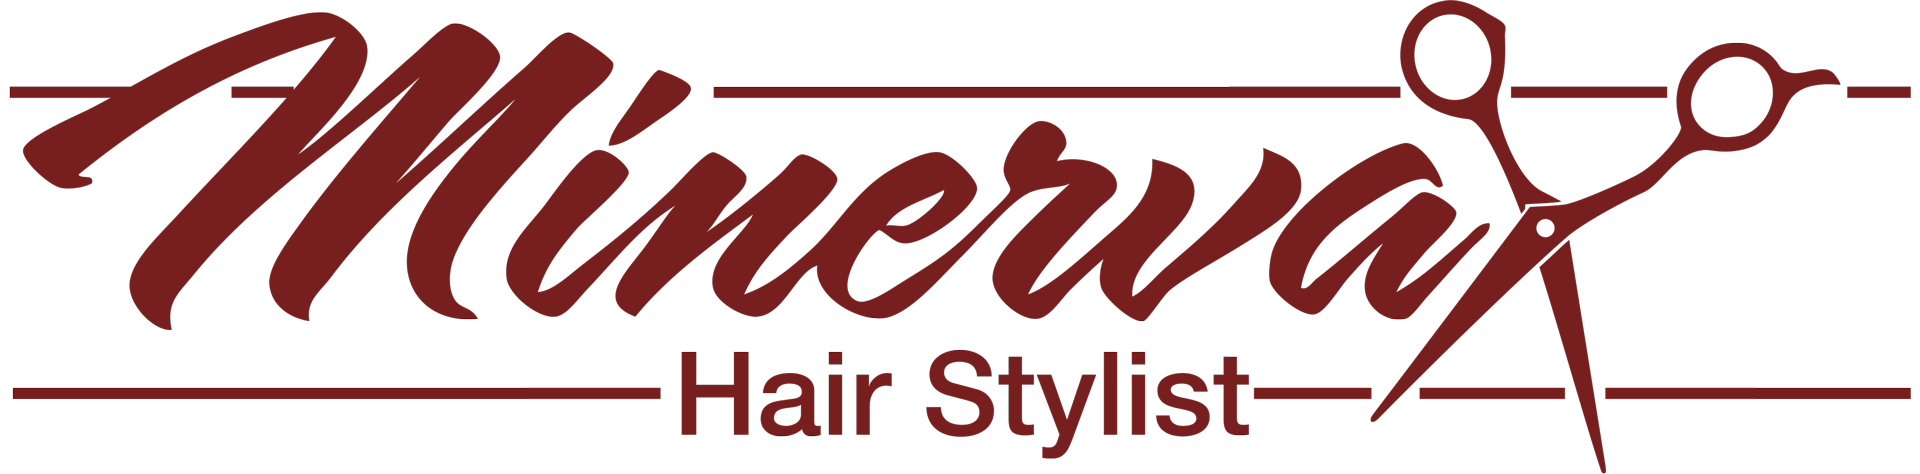 minerva hair stylist burgundy logo